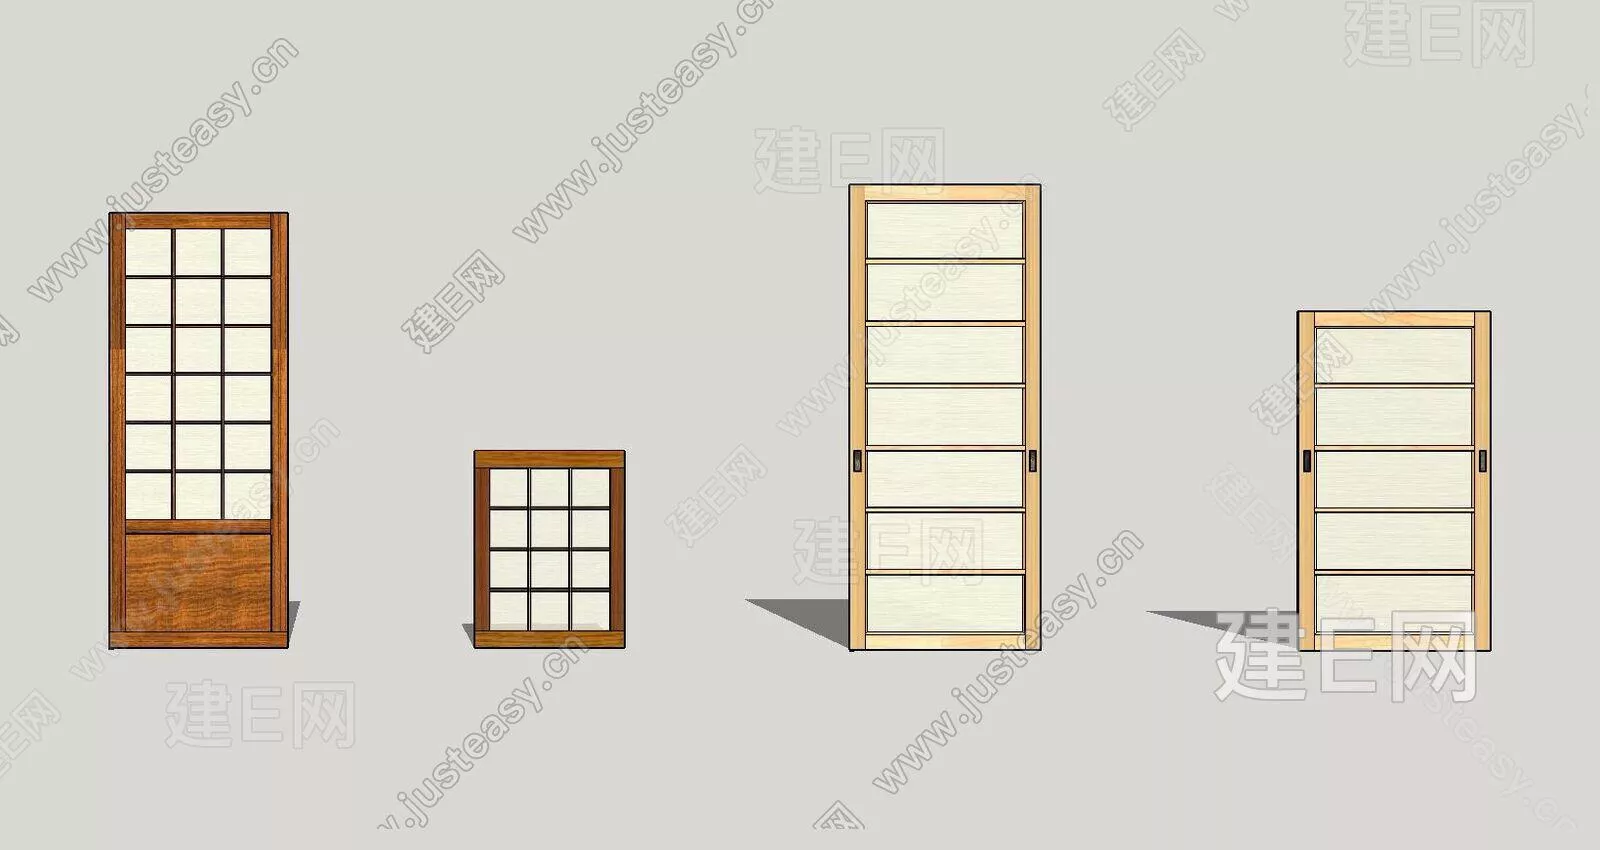 JAPANESE DOOR AND WINDOWS - SKETCHUP 3D MODEL - ENSCAPE - 105725962